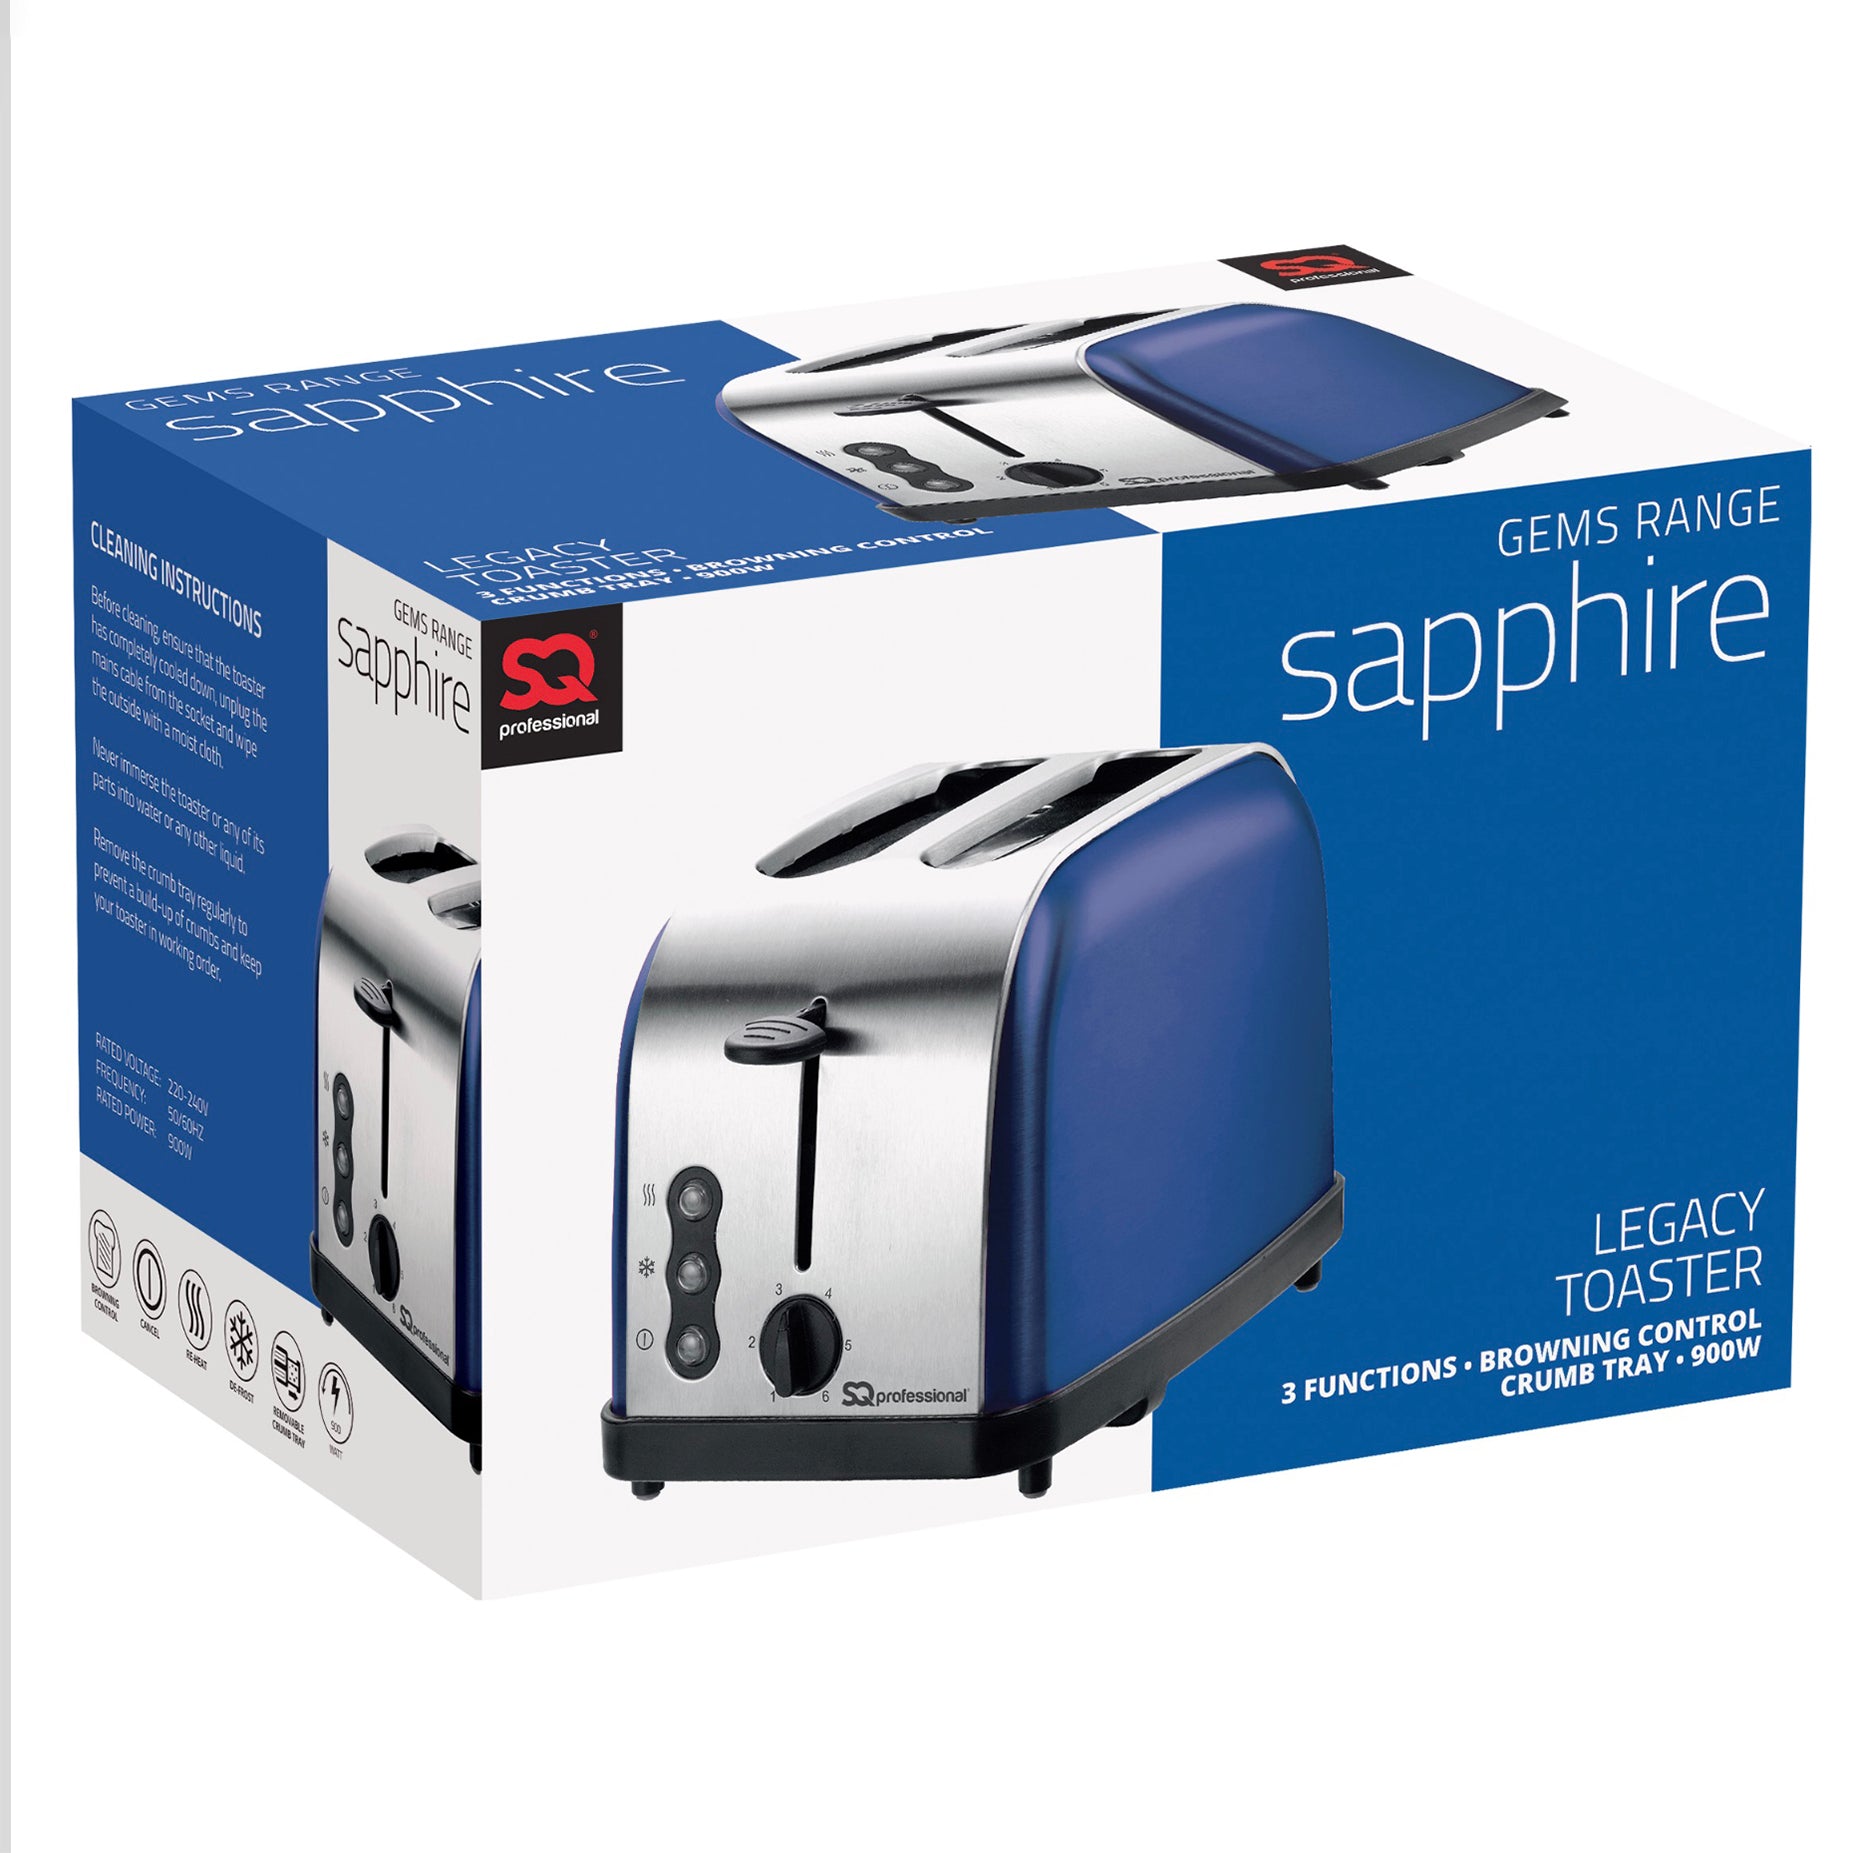 Legacy Toaster - GEMS - Sapphire